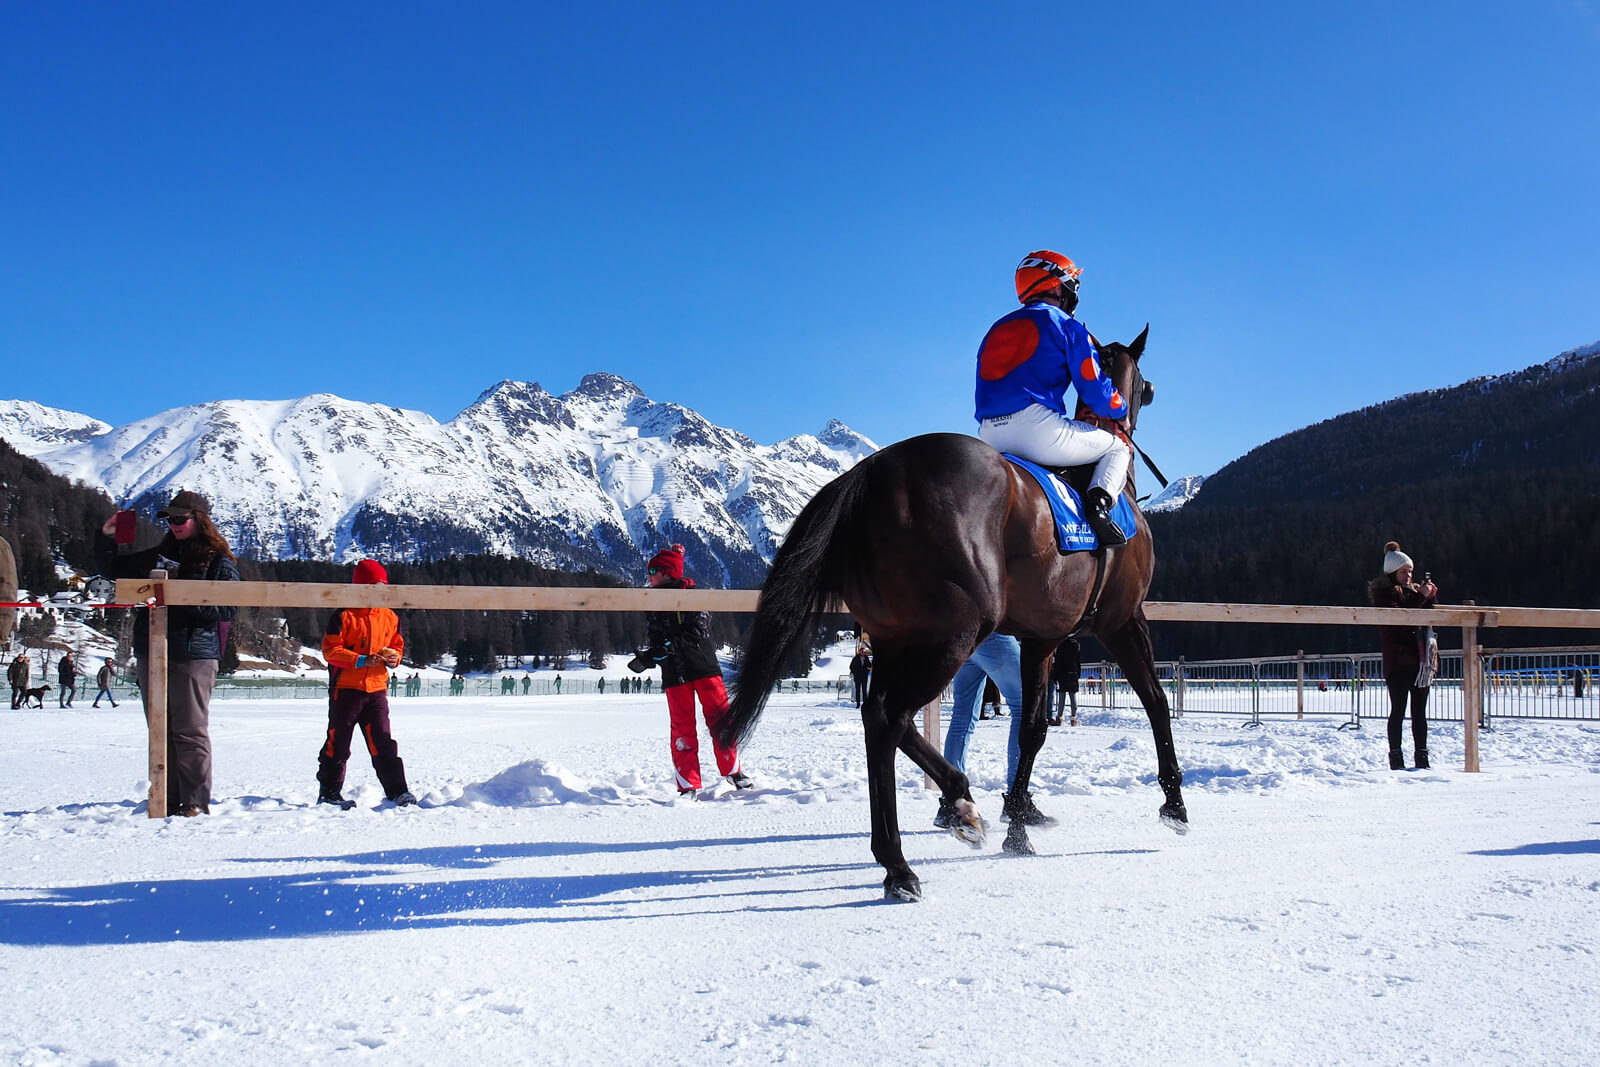 White Turf St. Moritz 2020 - Flat Race 9.2.20